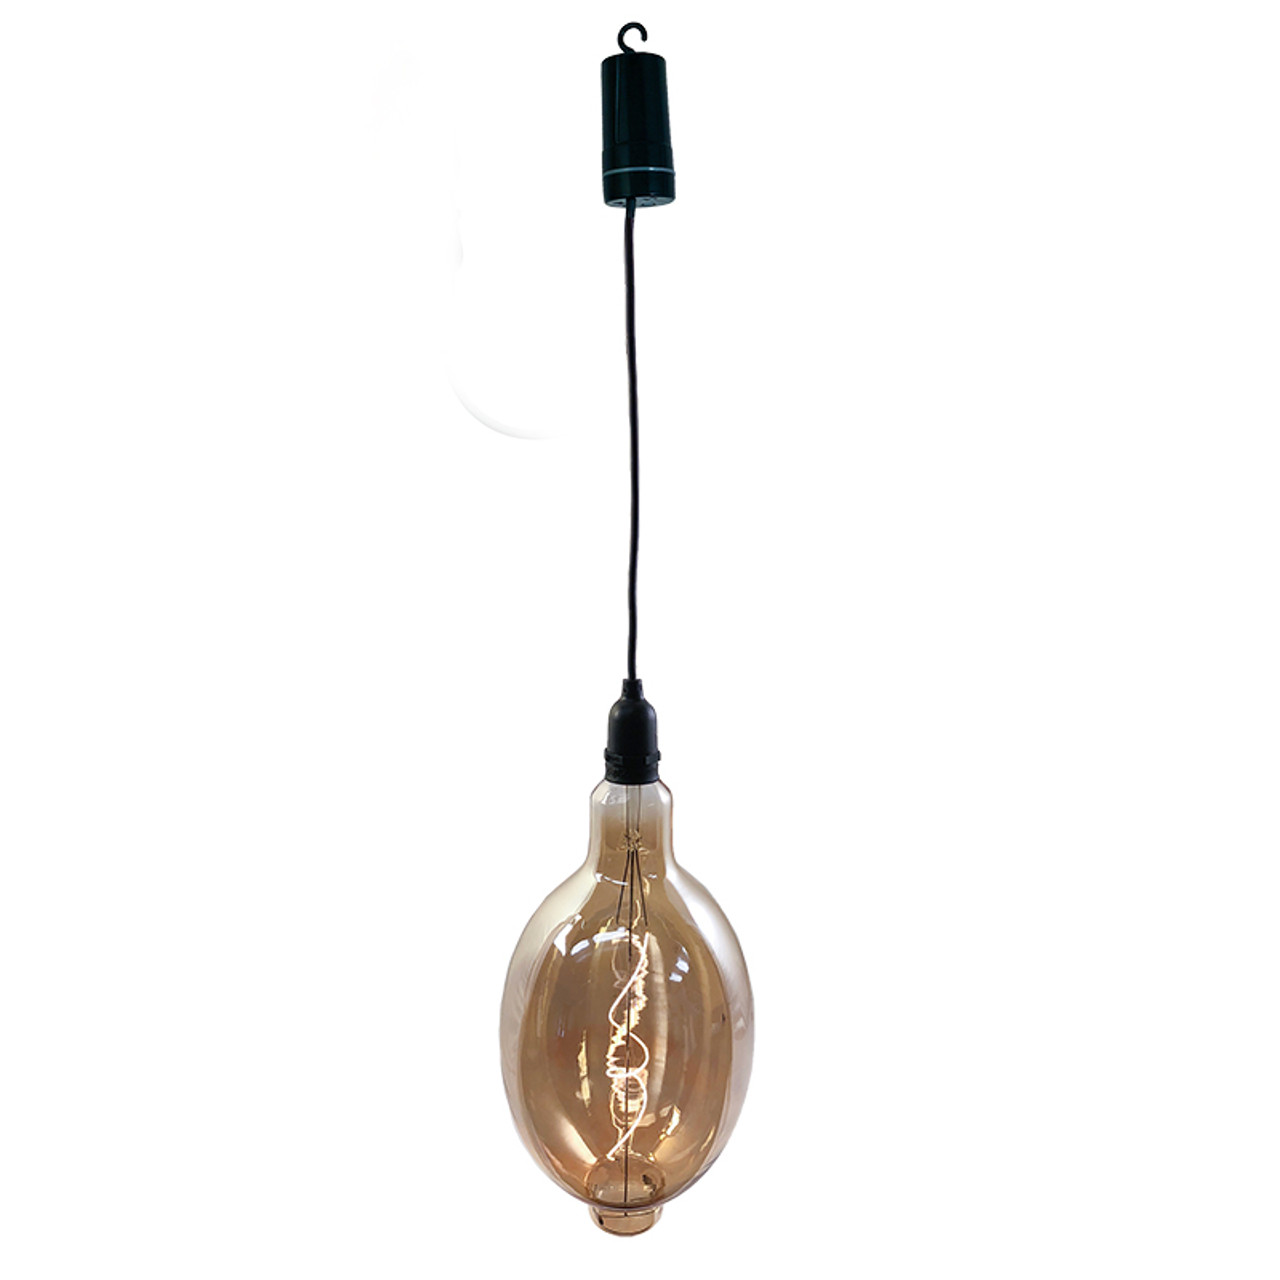 Battery-Powered Decorative Light - A large LED light bulb